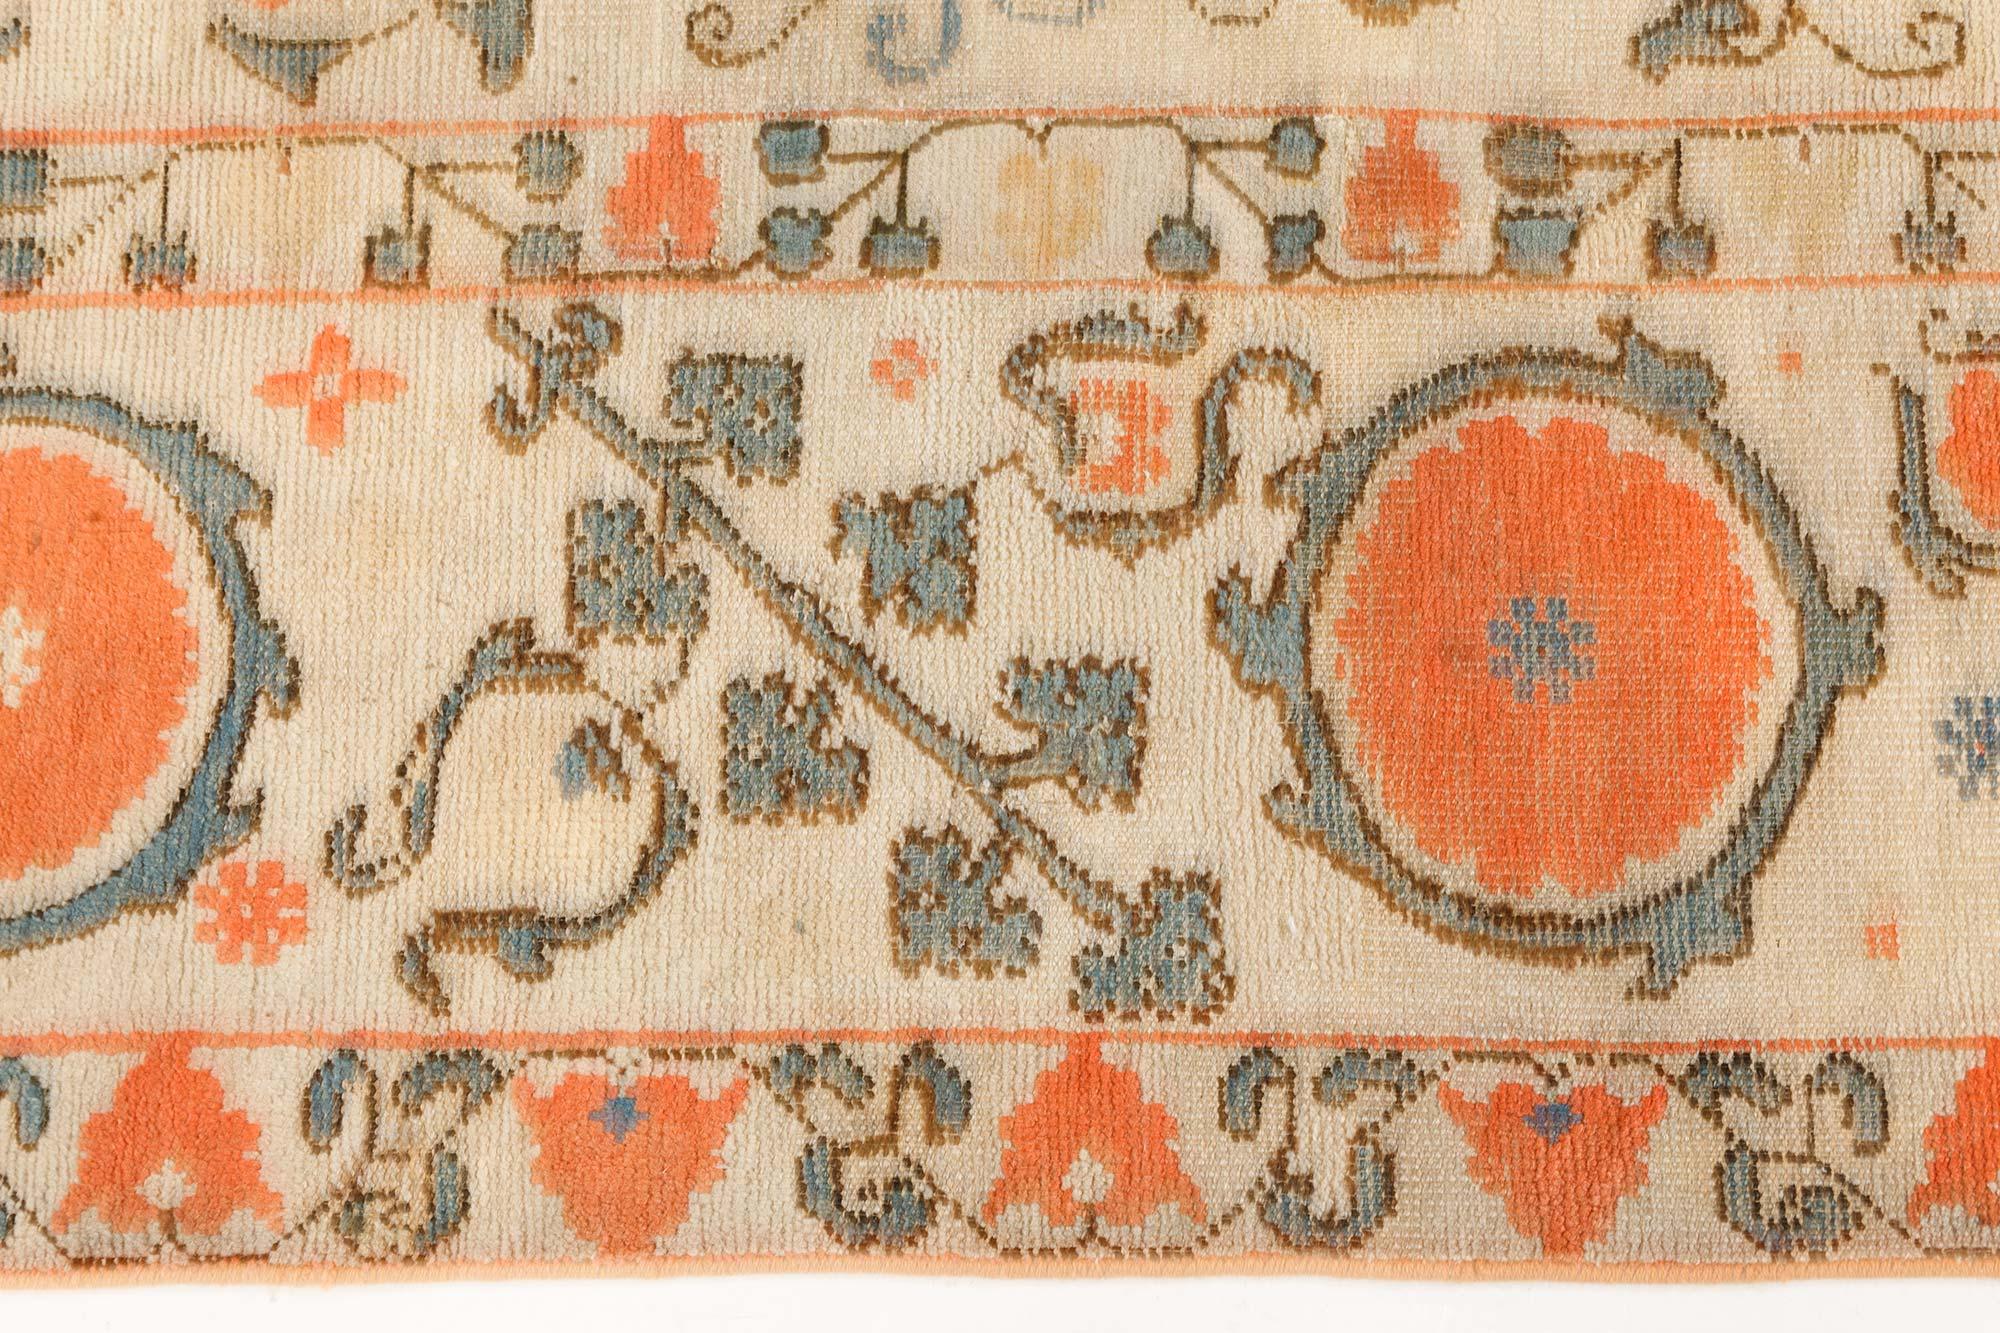 Vintage Samarkand 'Khotan' Orange Handmade Wool Carpet.
Size: 5'3